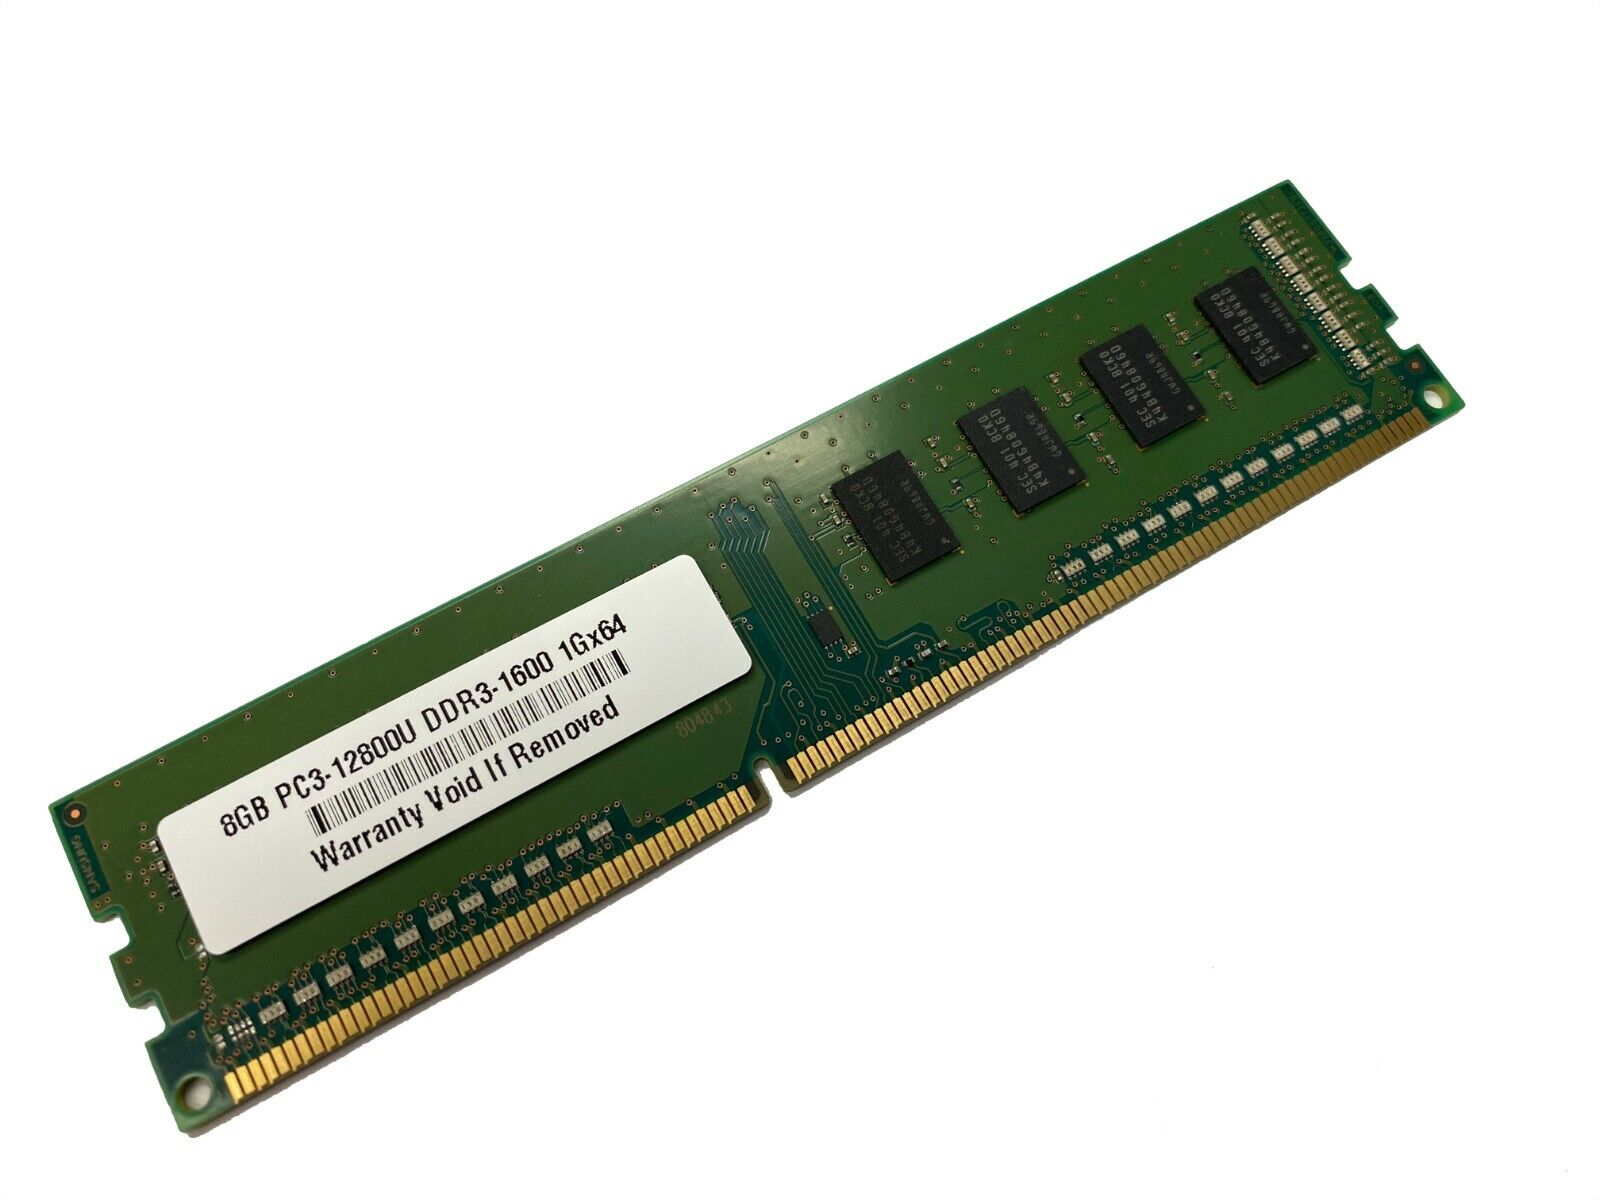 8GB Memory for Gigabyte GA-970A-D3, GA-970A-D3P, GA-970A-DS3 DDR3 PC3-12800U RAM